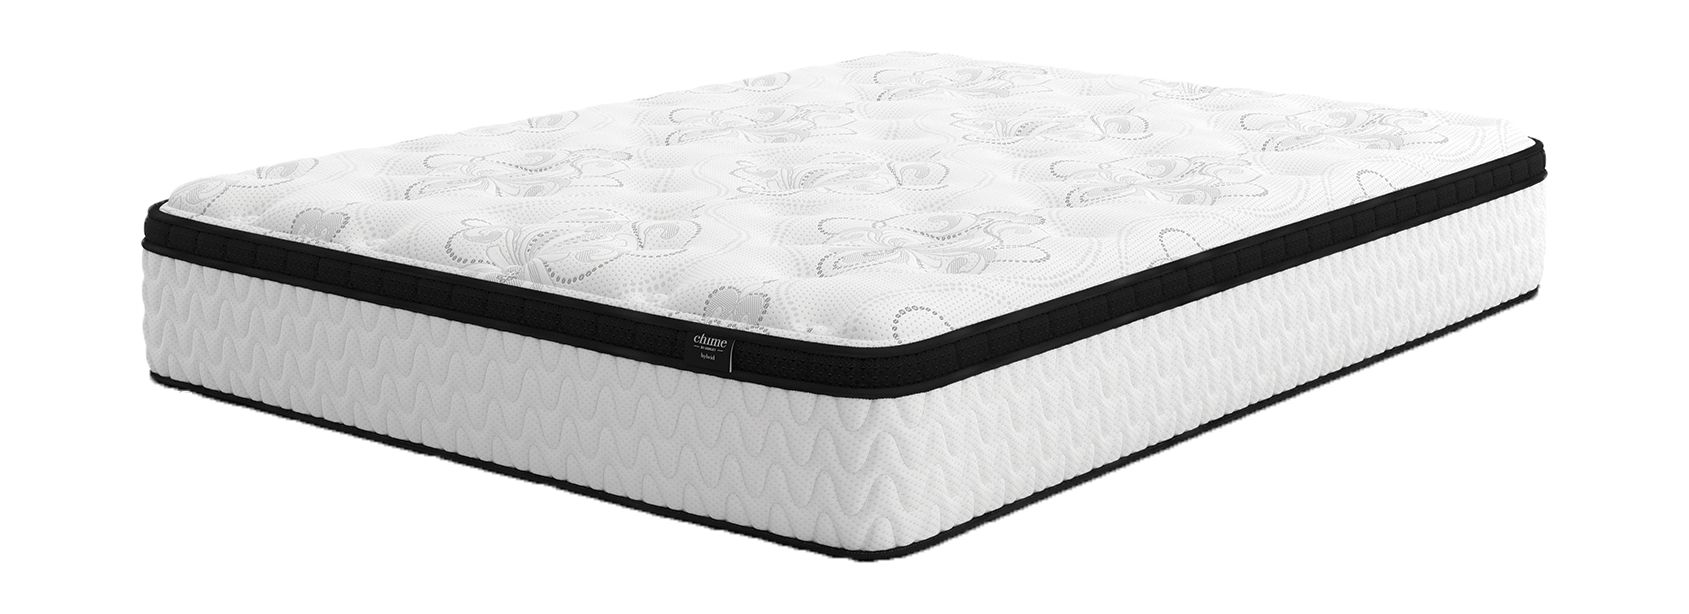 queen mattress 12 inch hahn